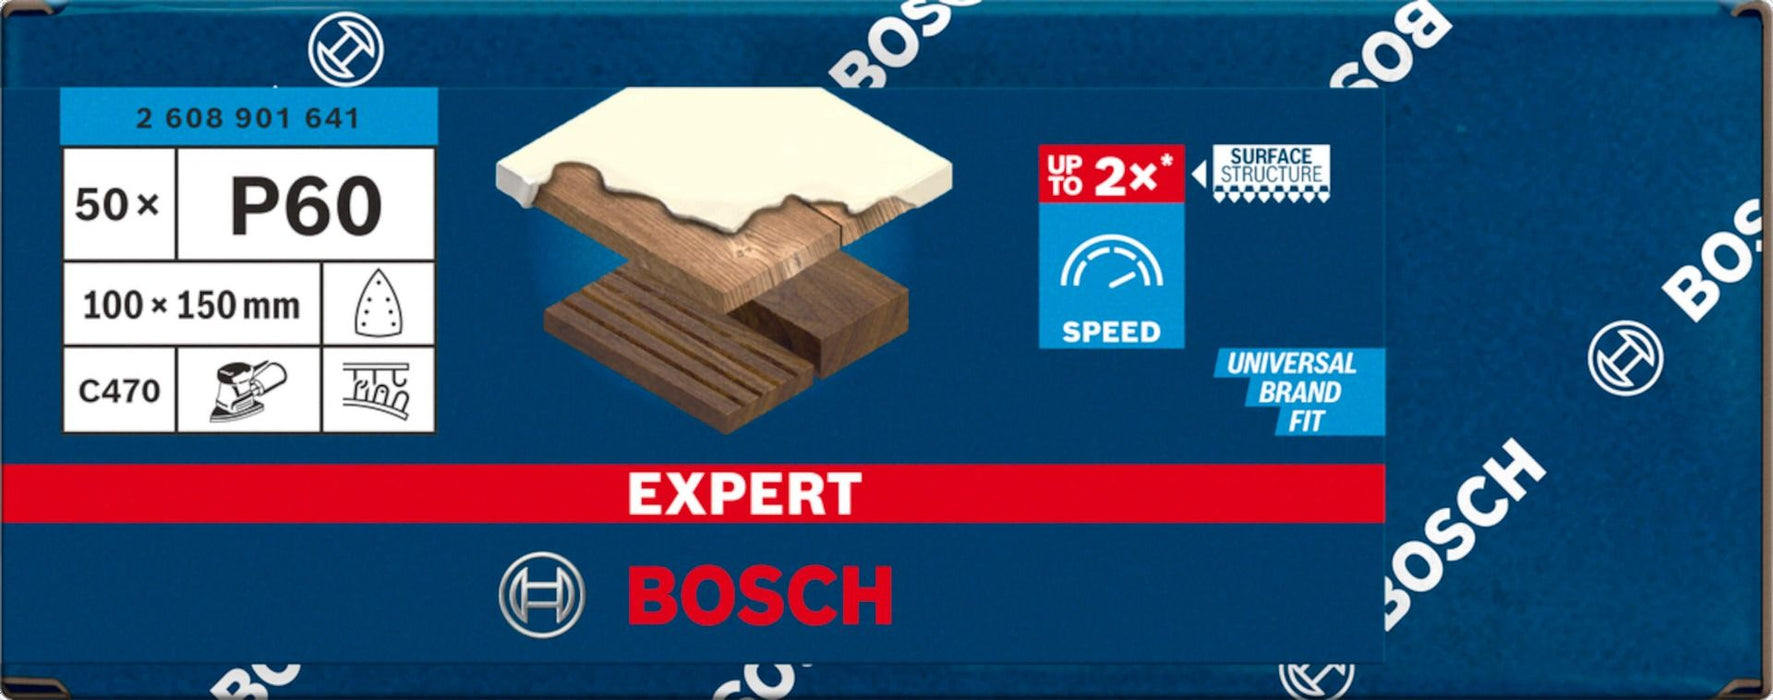 Bosch EXPERT list C470, 100 x 150mm granulacija 60; pakovanje od 50 komada (2608901641)